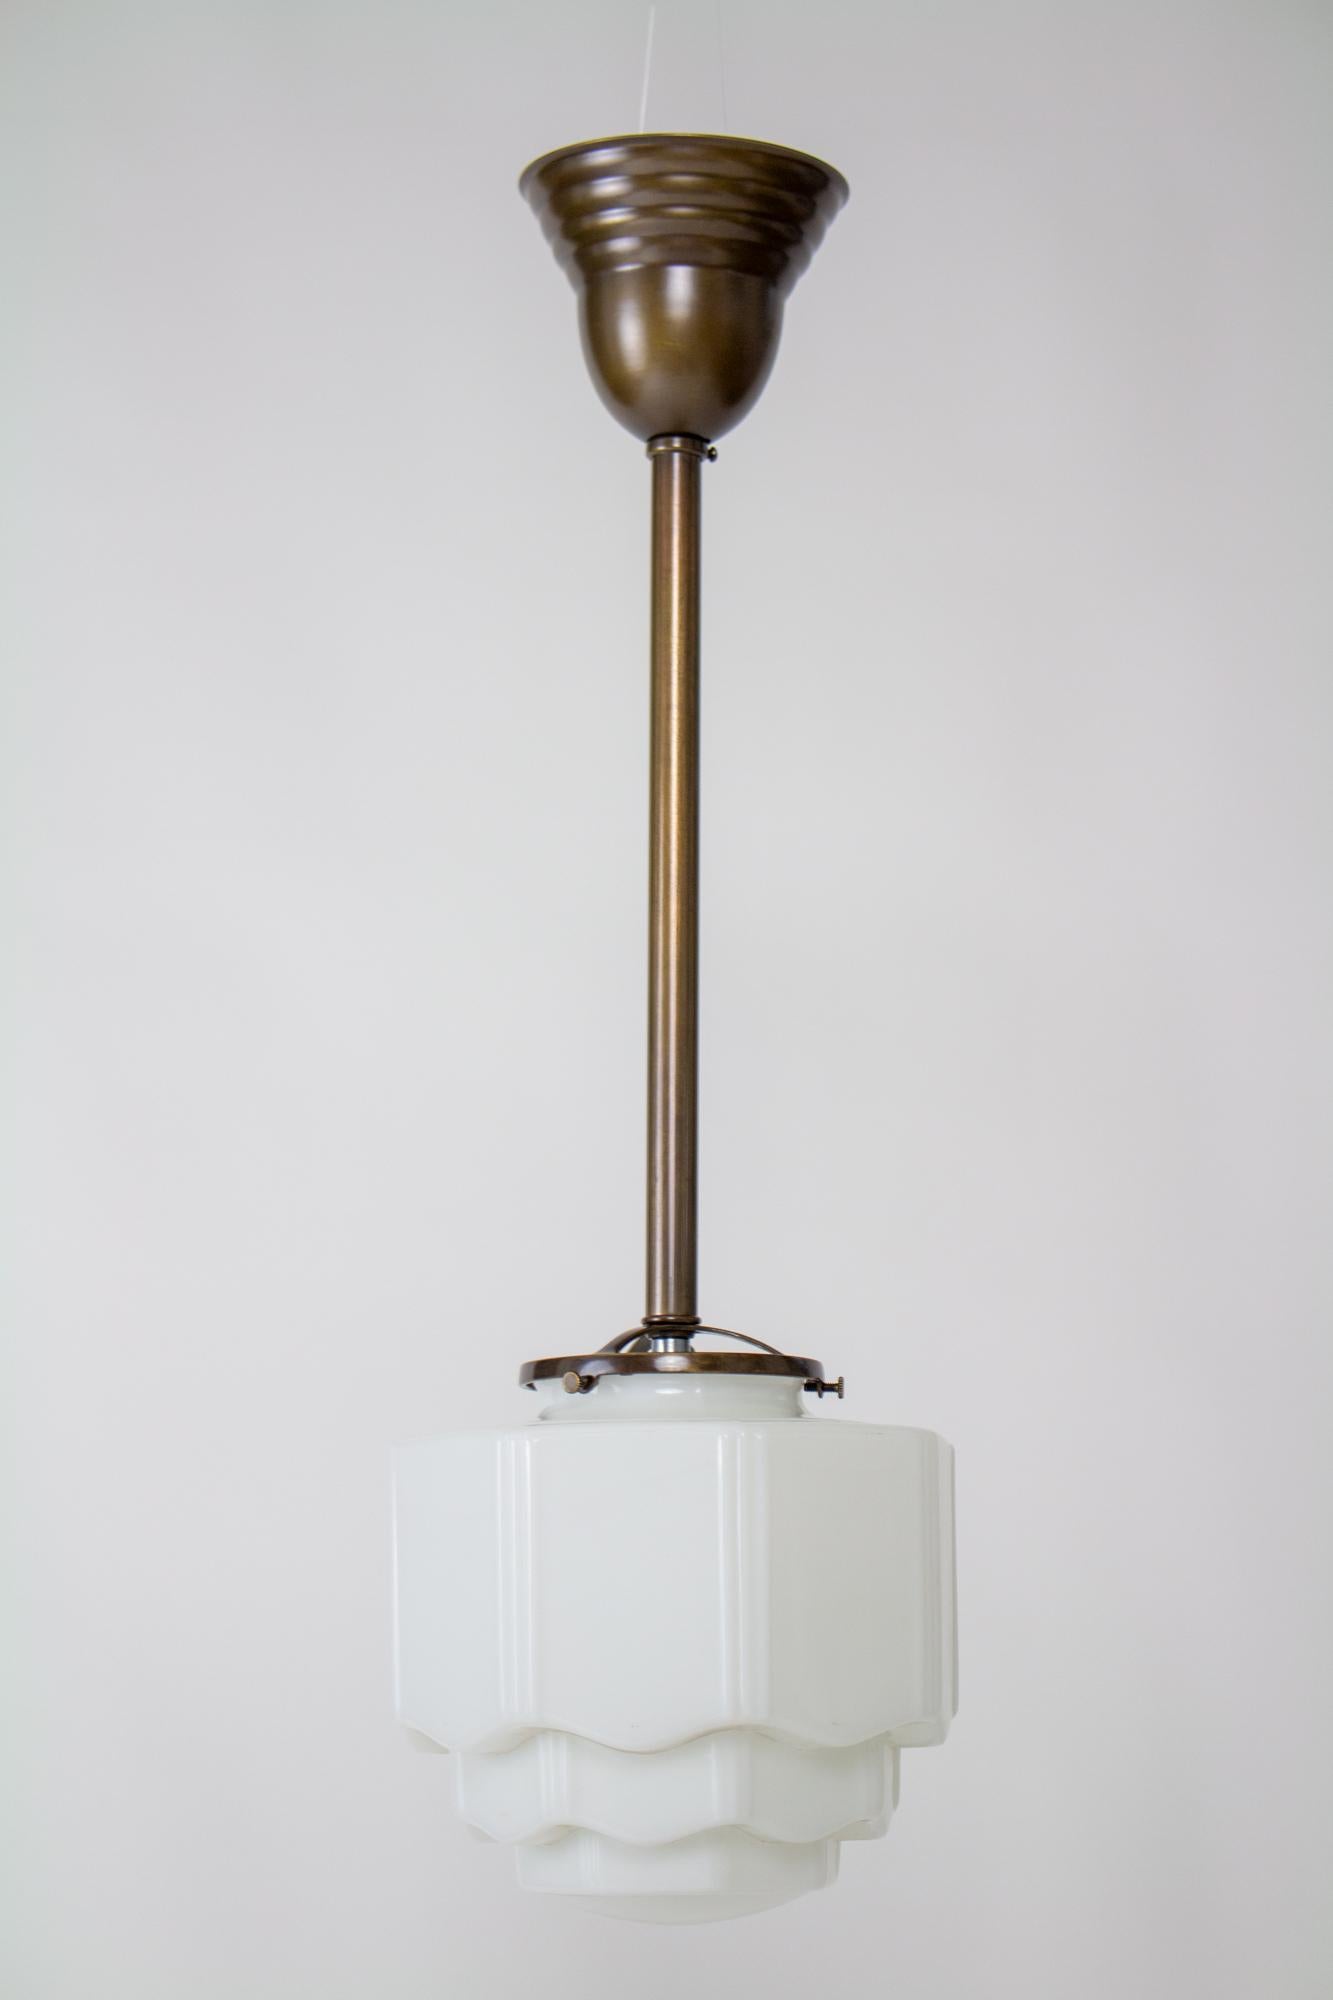 Early 20th century art deco milk glass pole pendant. Brass pole pendant with a dark antique brass finish. Milk glass art deco skyscraper shade. Glass in very good condition. Fixture is custom, in excellent condition, with an even finish, rewired and